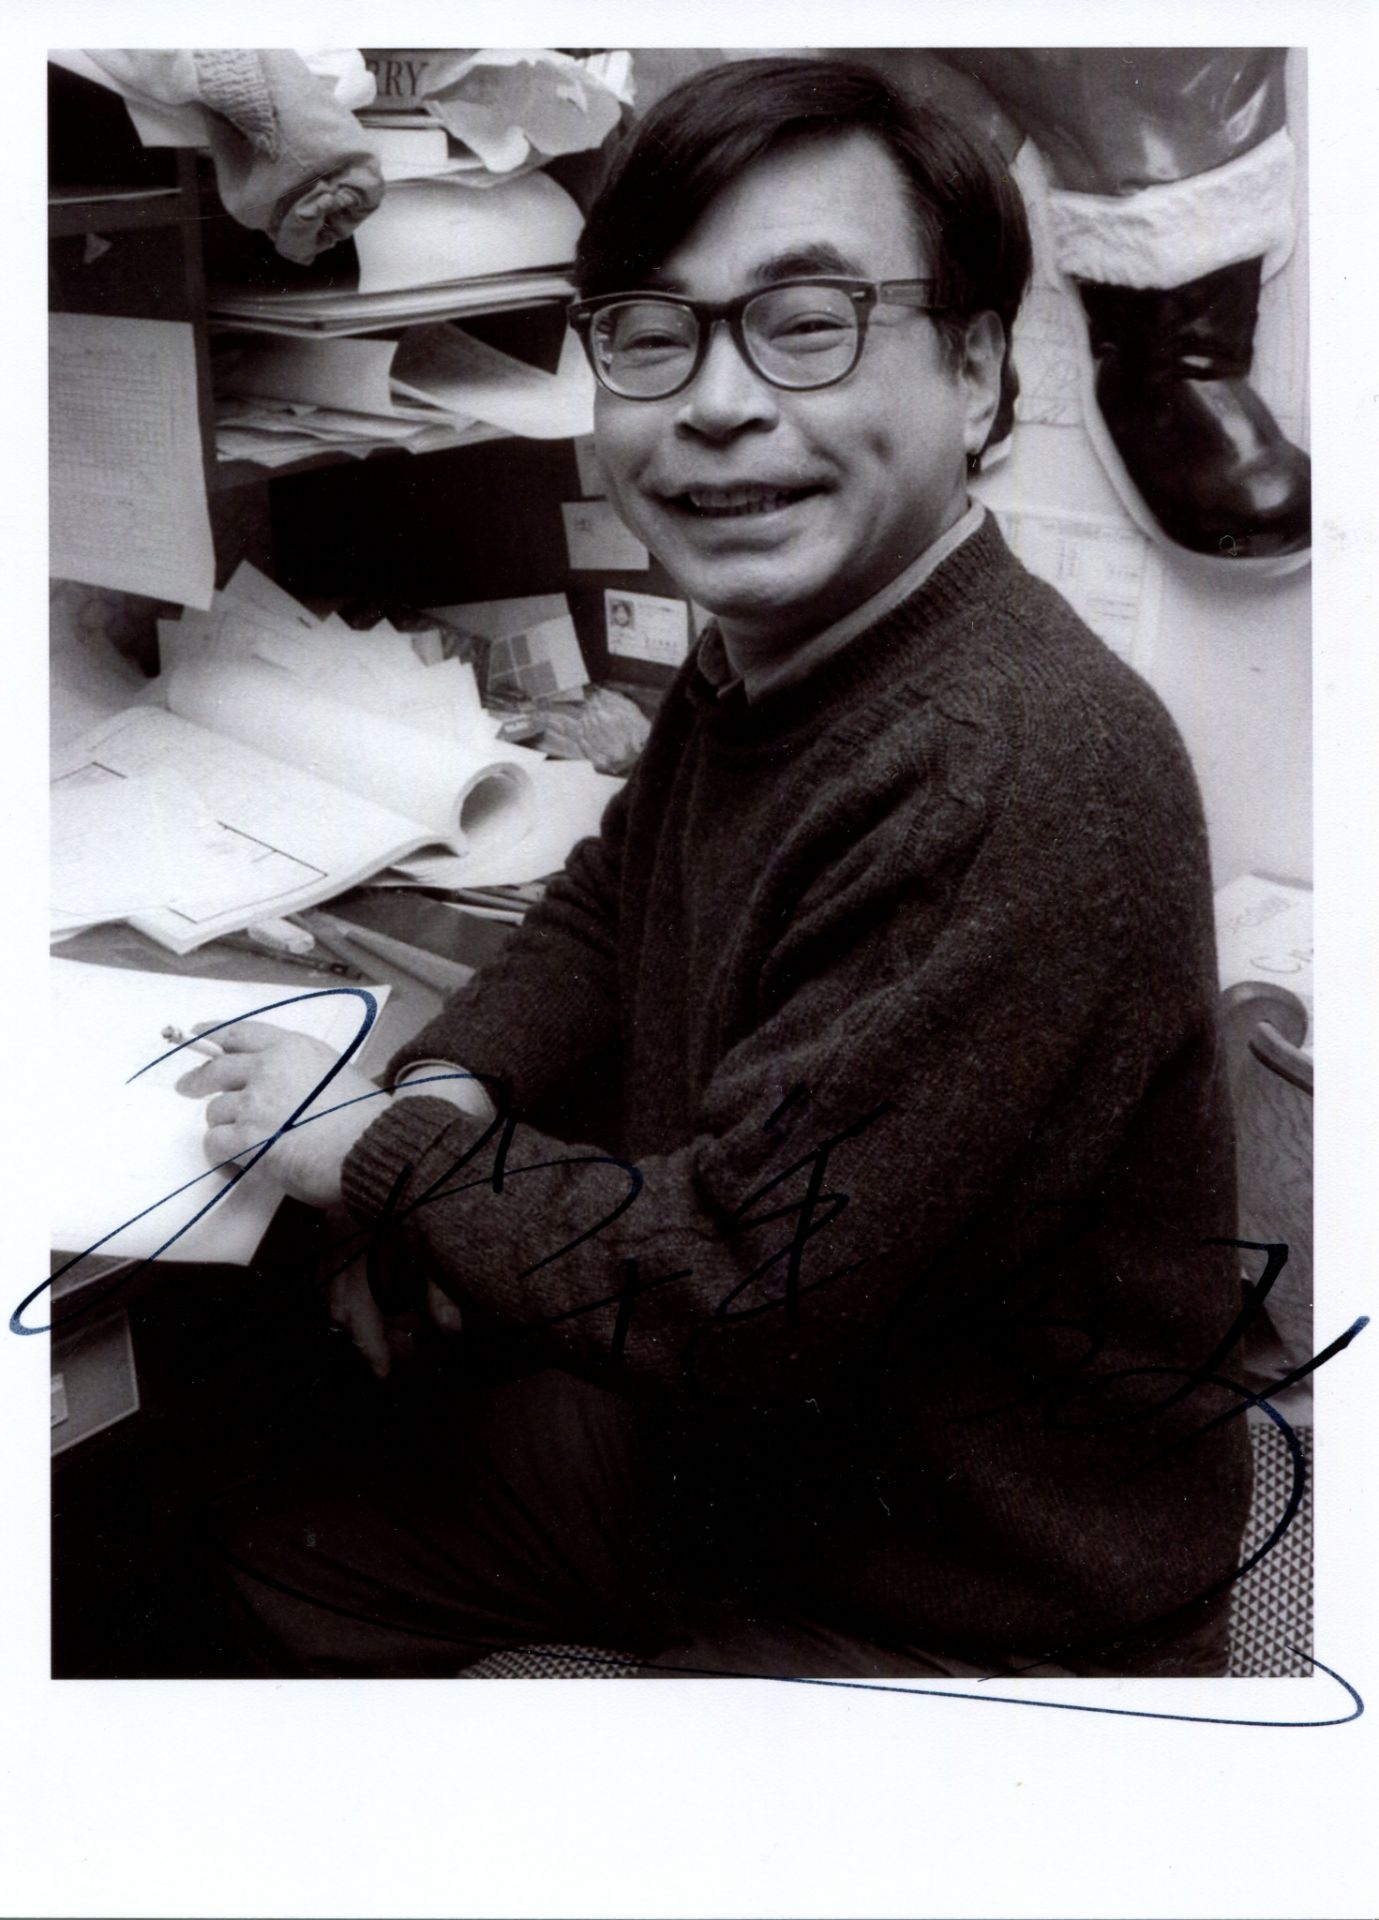 MIYAZAKI HAYAO: (1941- ) Japanese Filmmaker of animated feature films. A manga Artist.